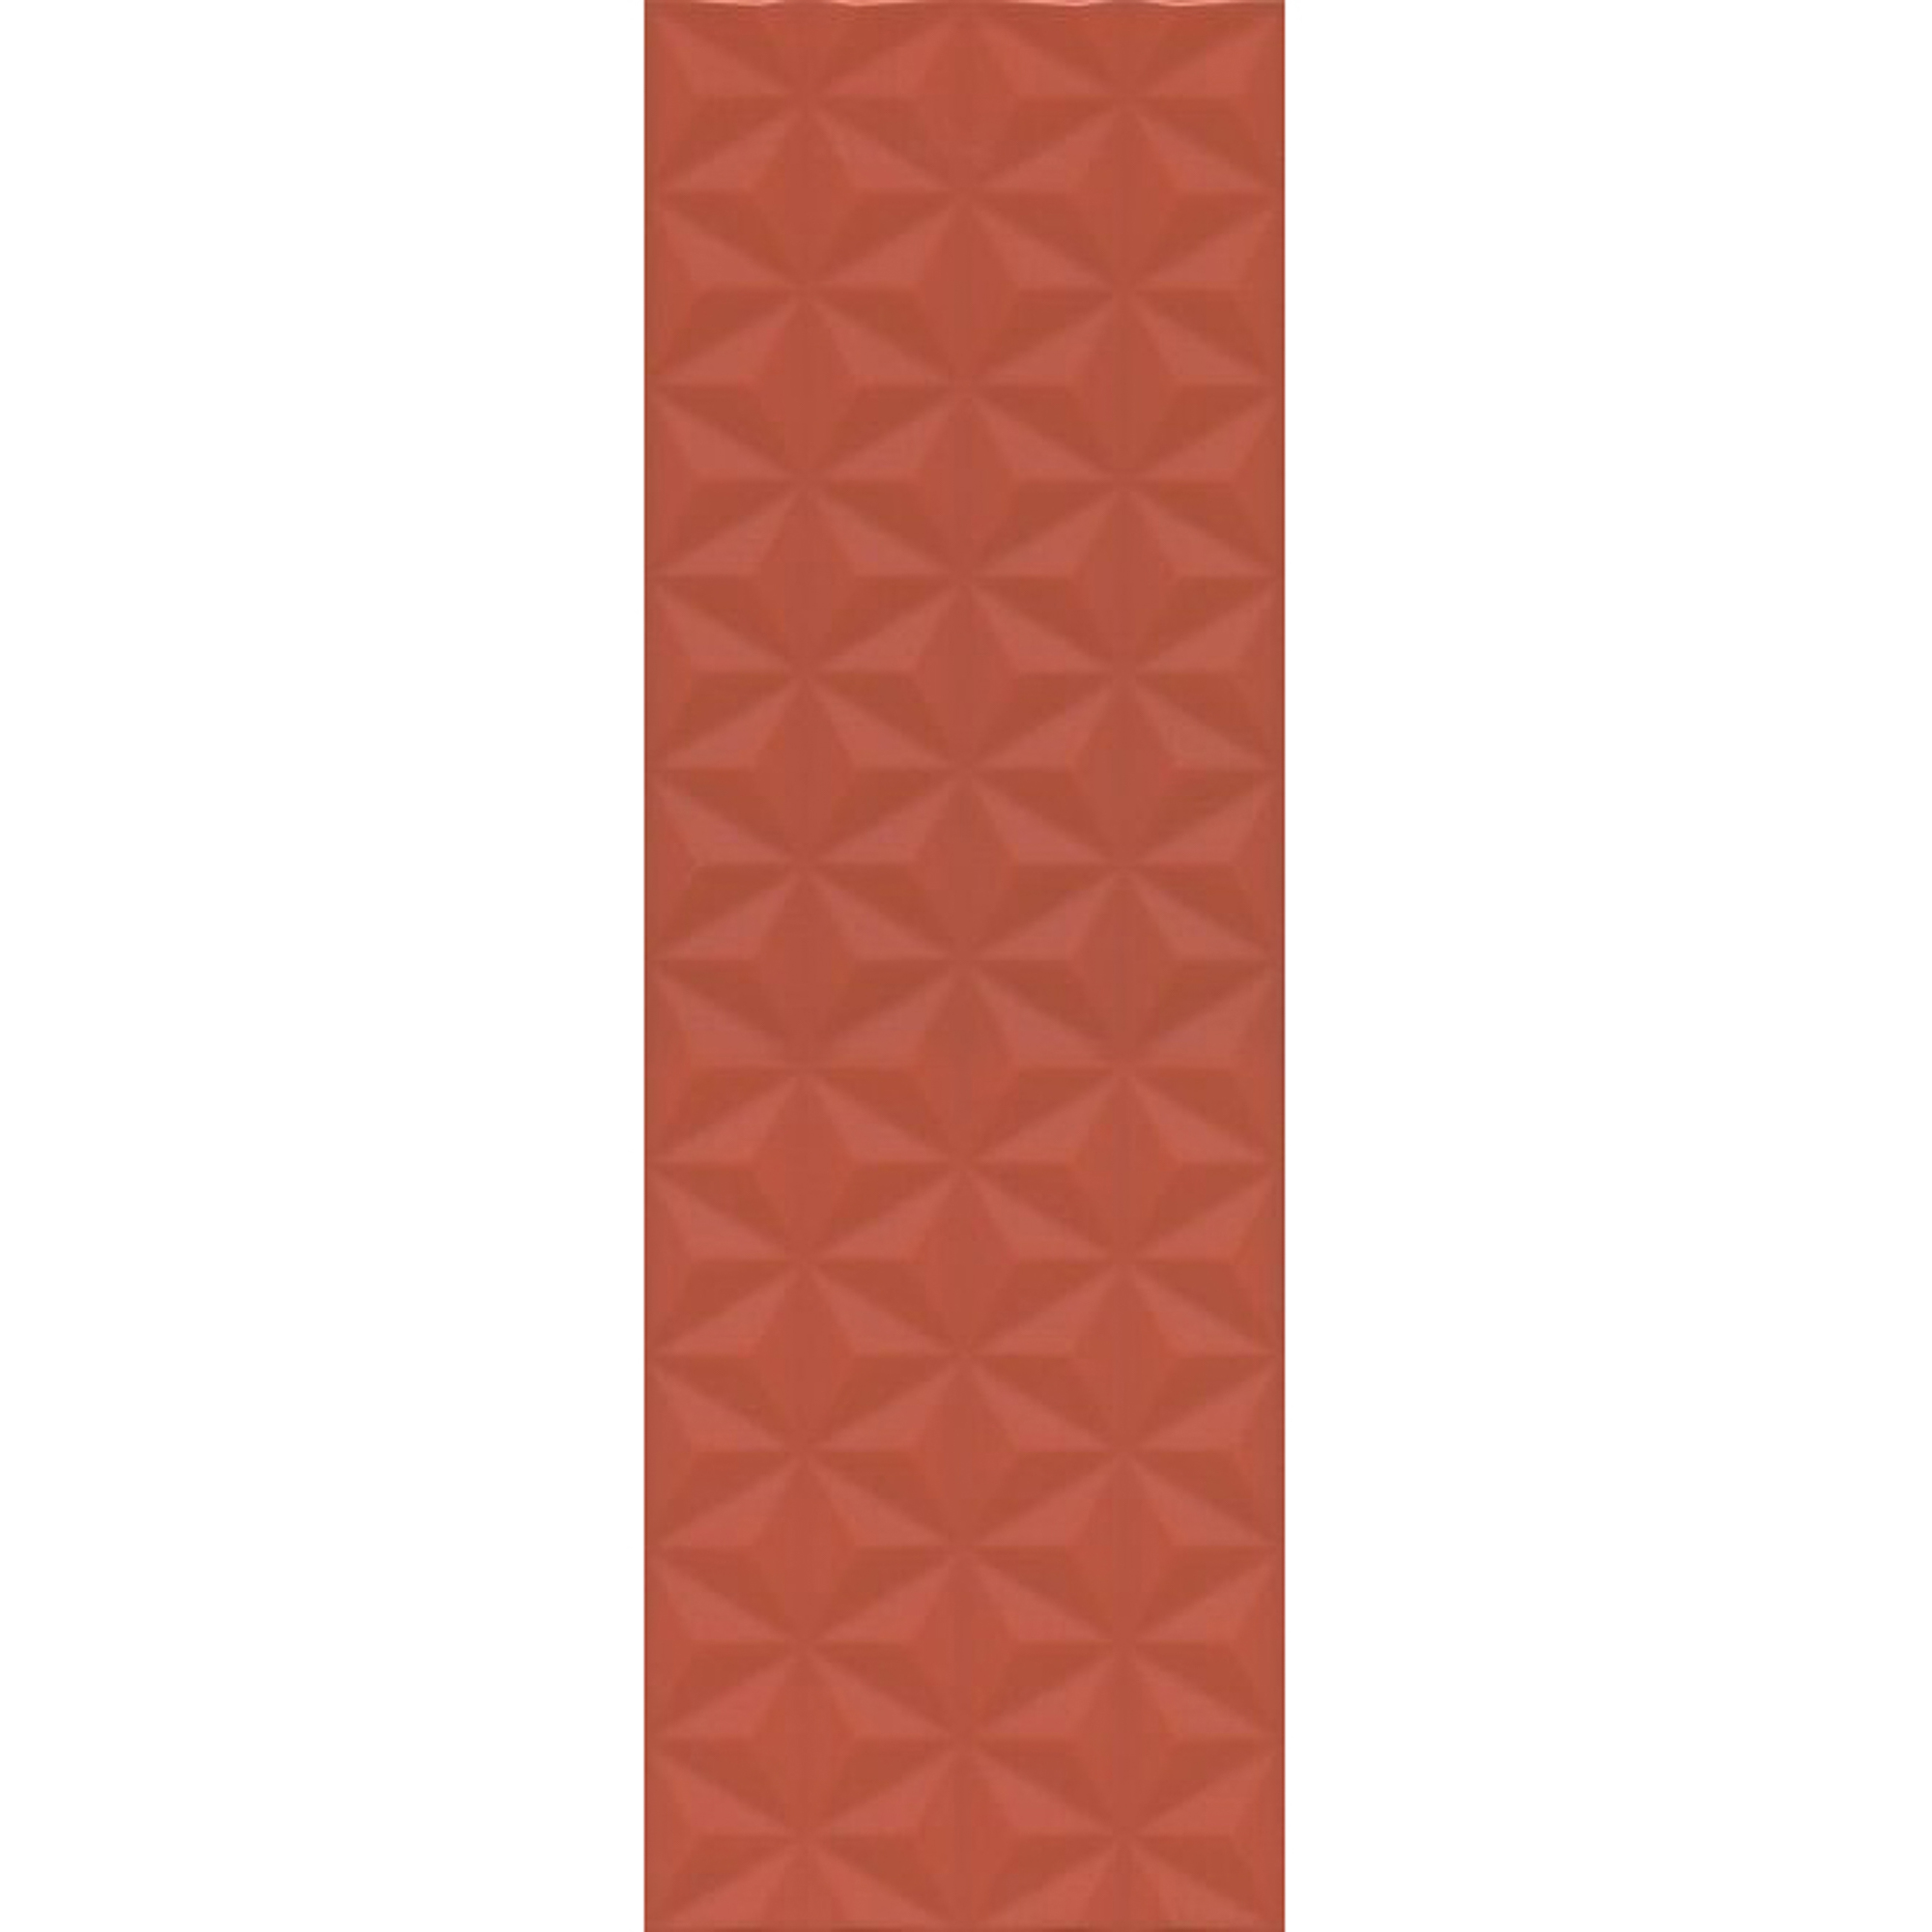 Плитка Kerama Marazzi Диагональ красная структура 25x75 см 12120R плитка облицовочная kerama